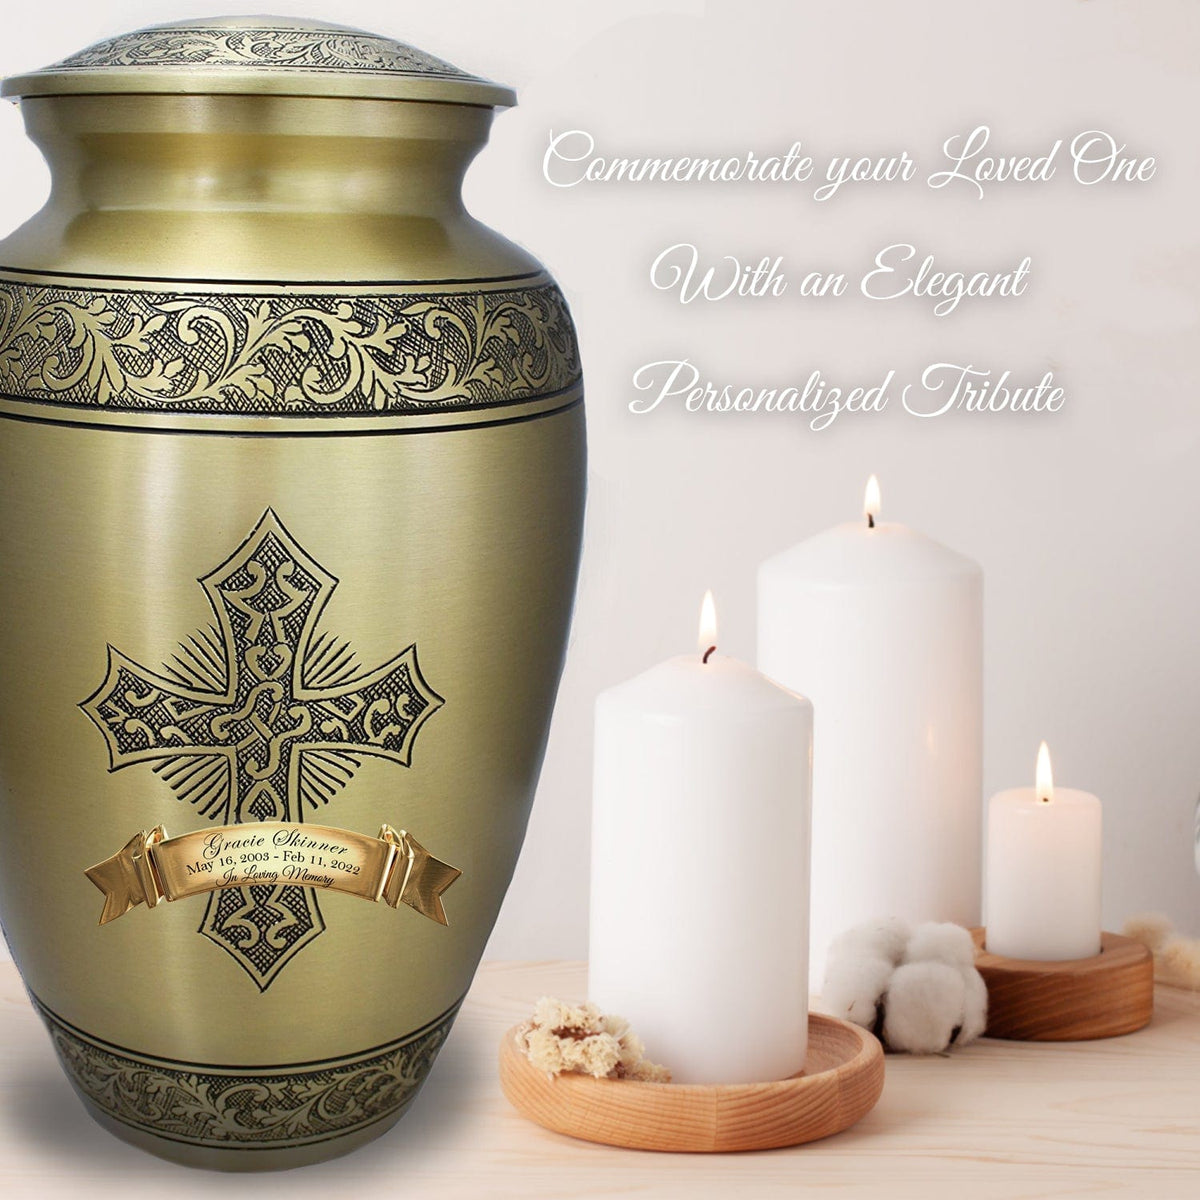 Commemorative Cremation Urns Home &amp; Garden Love of Christ Gold Cross Cremation Urns